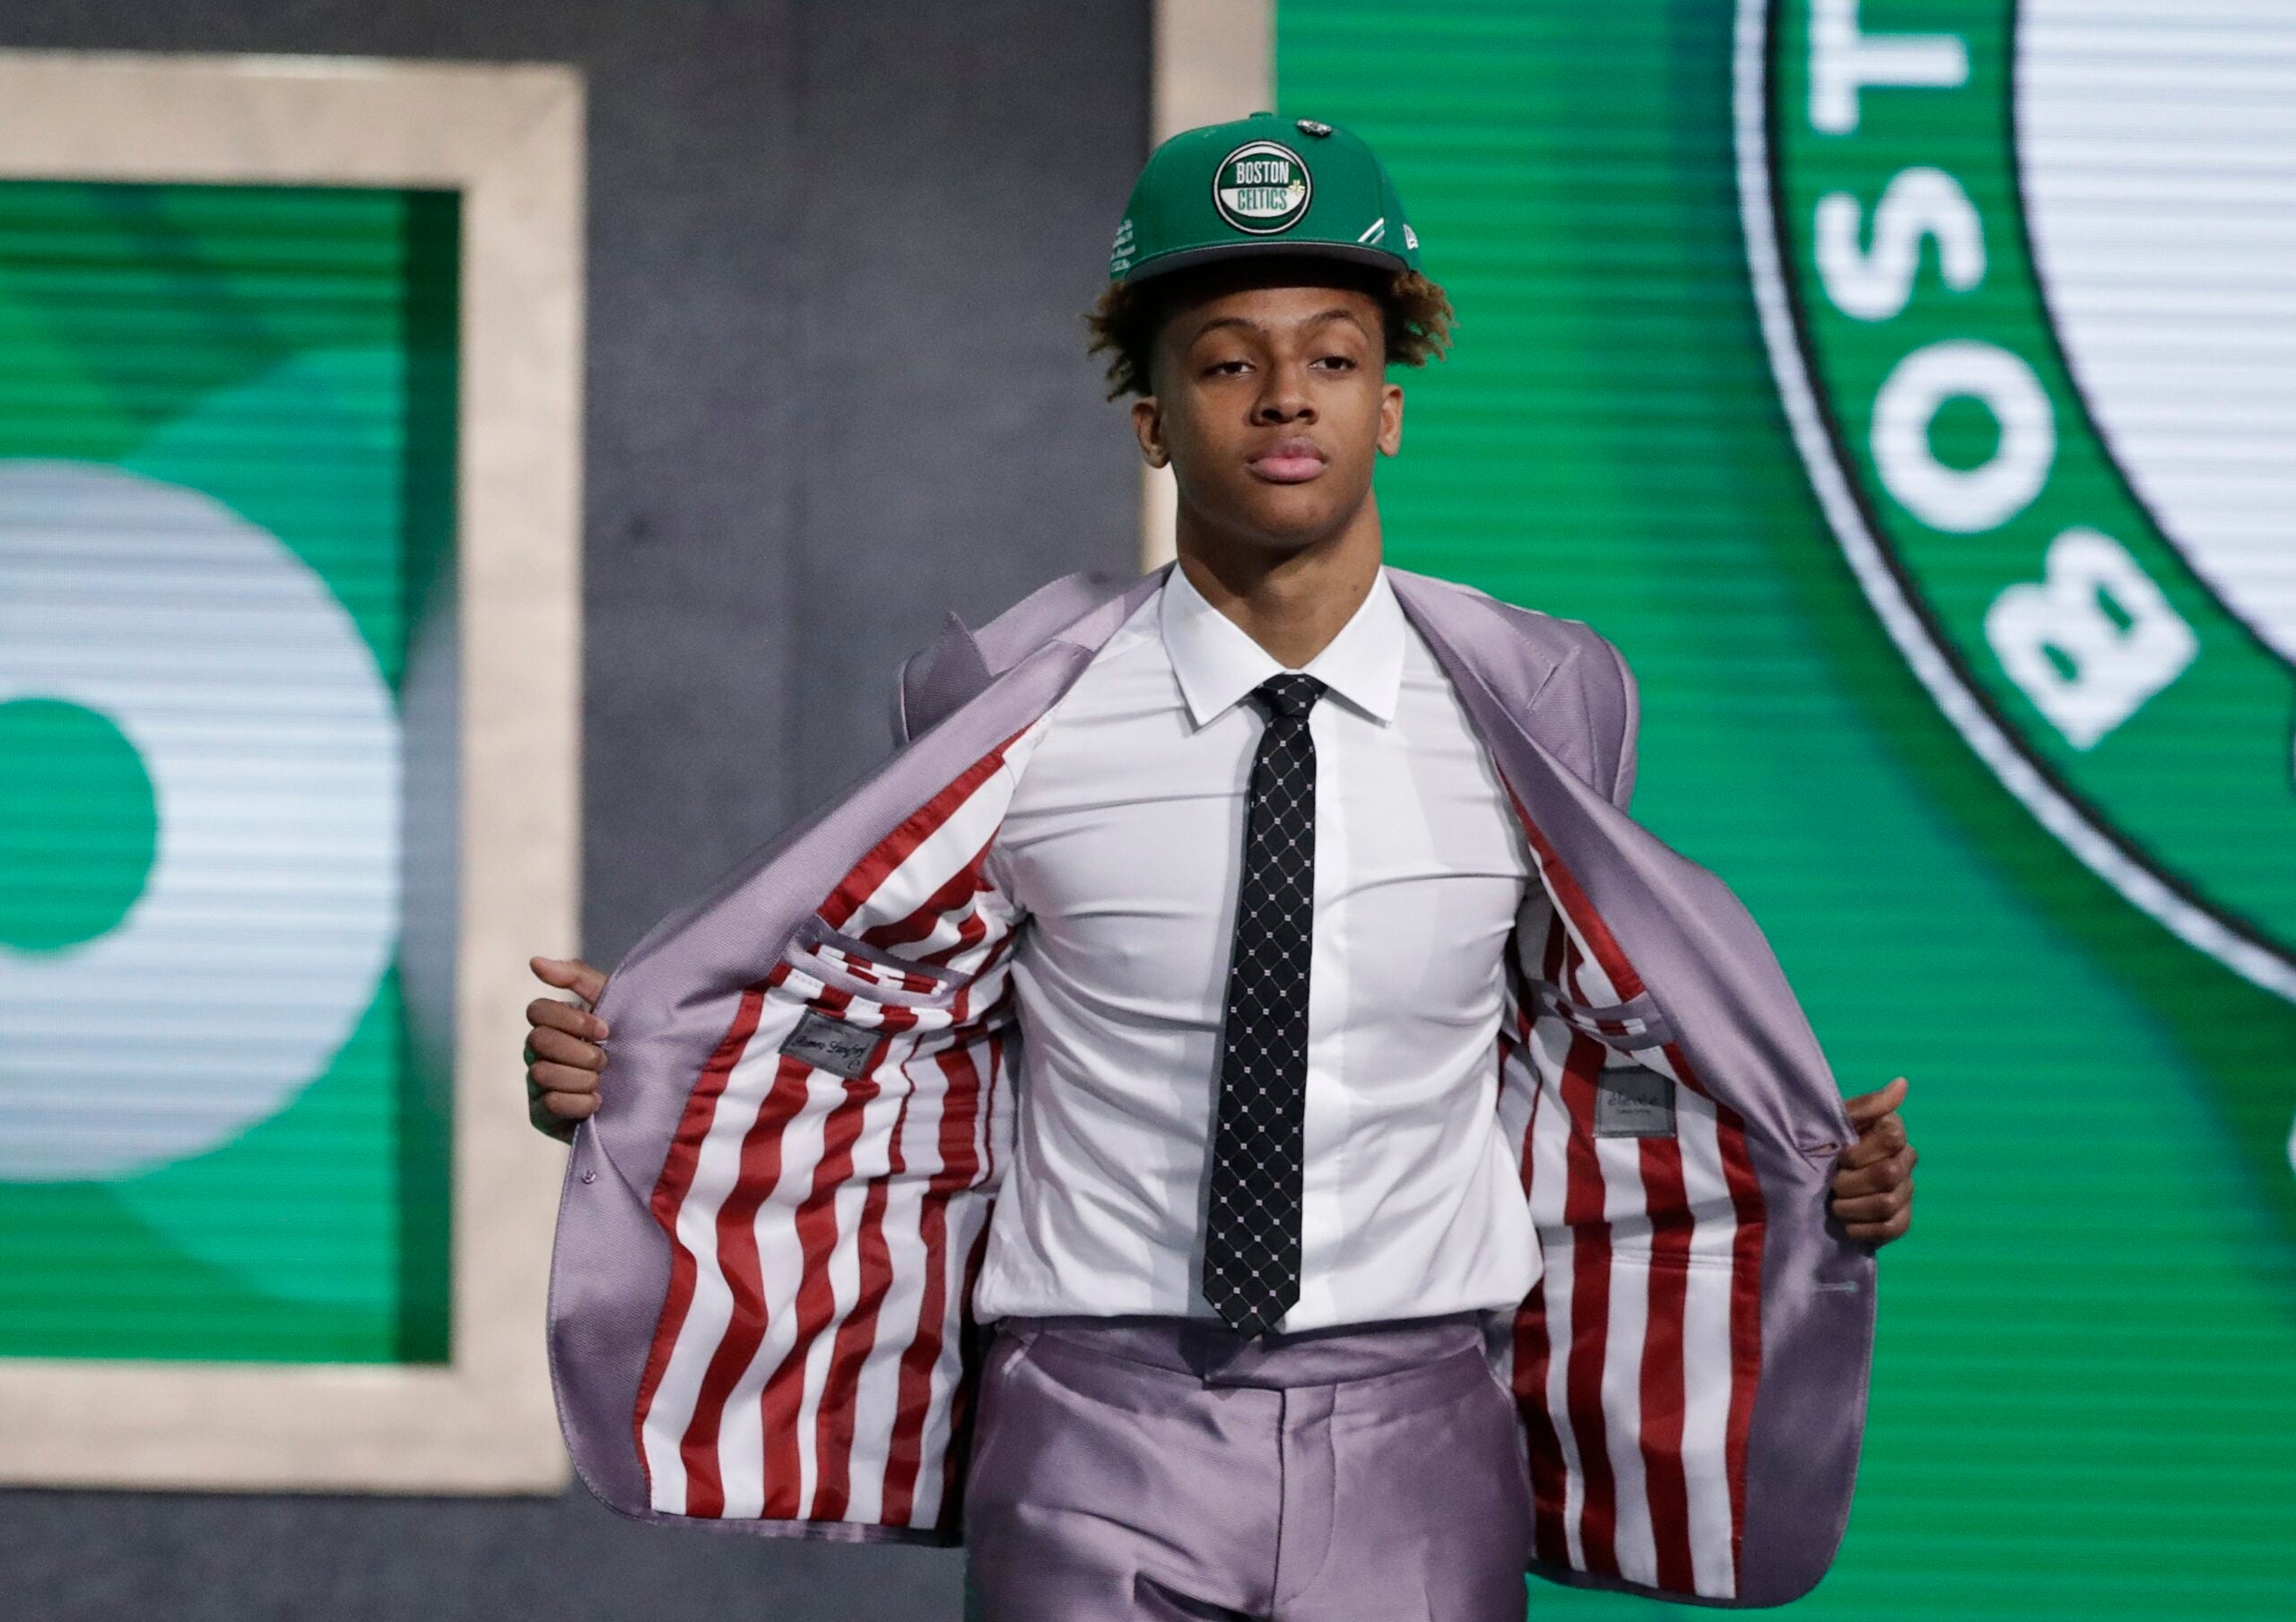 2019 NBA Draft: Boston Celtics Select Grant Williams From